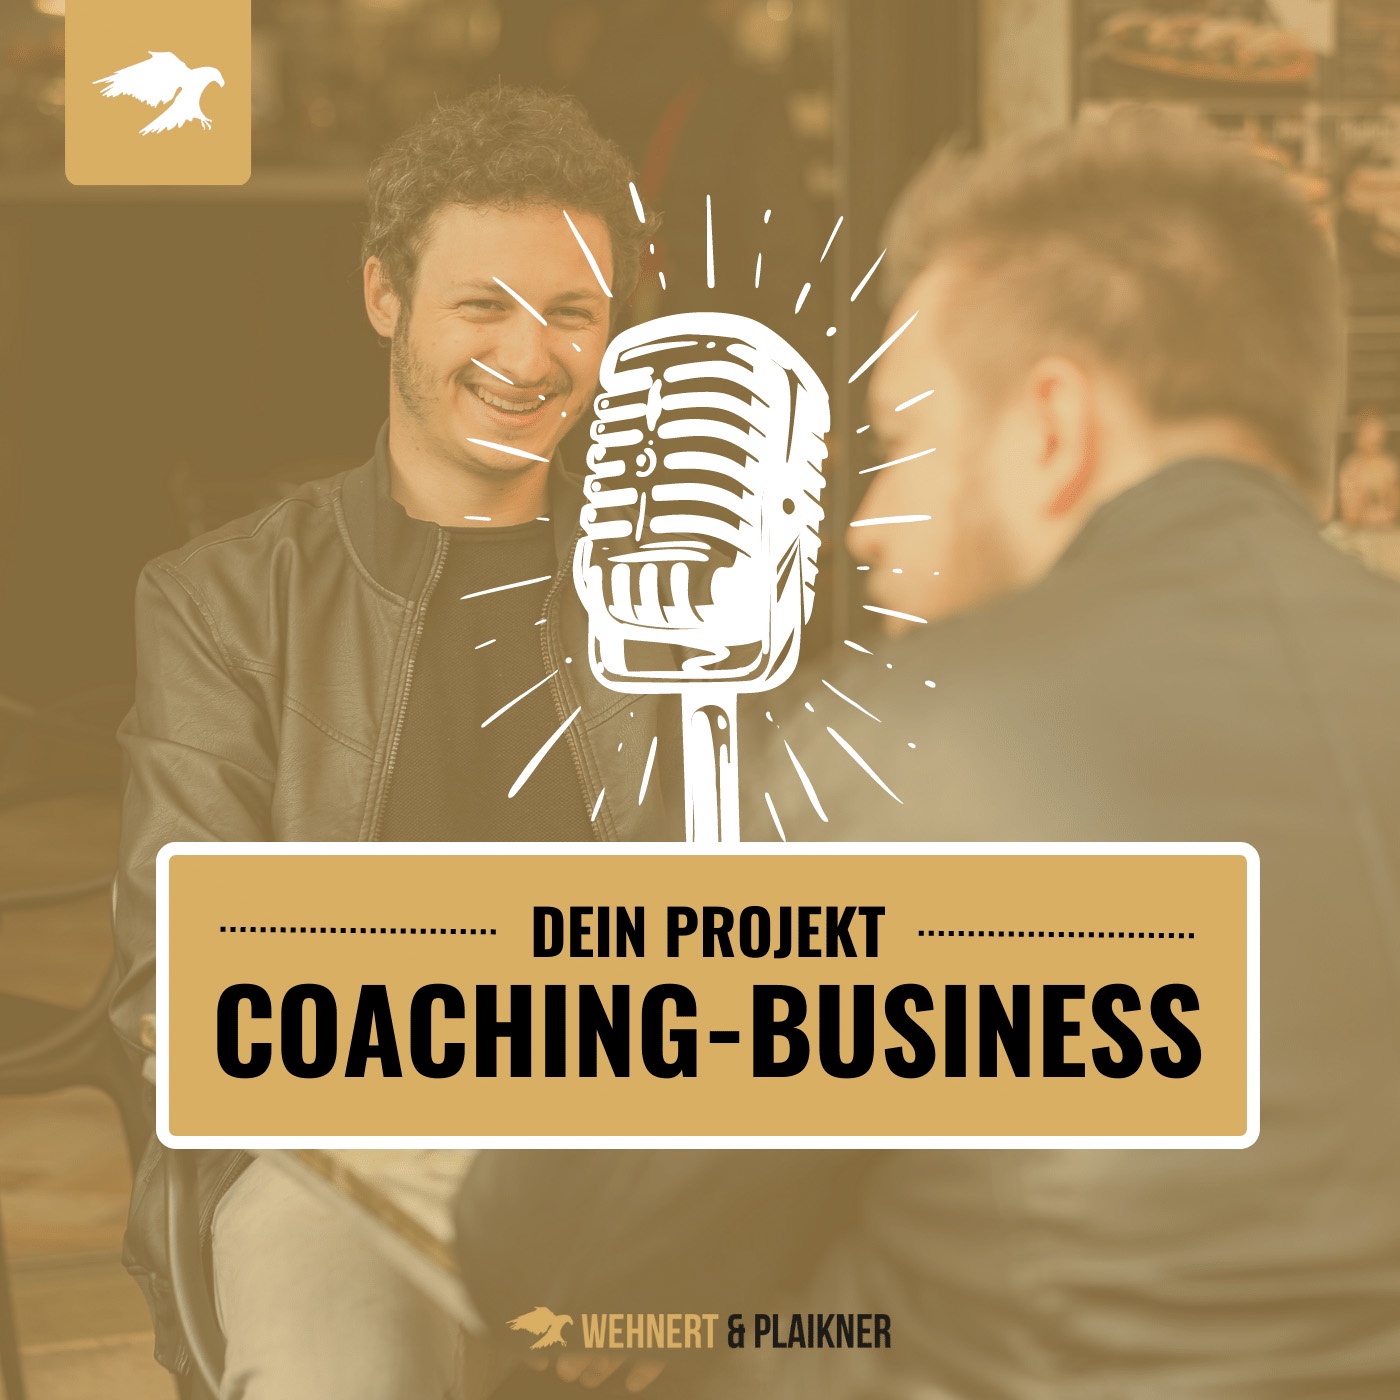 Dein Projekt: Coaching-Business